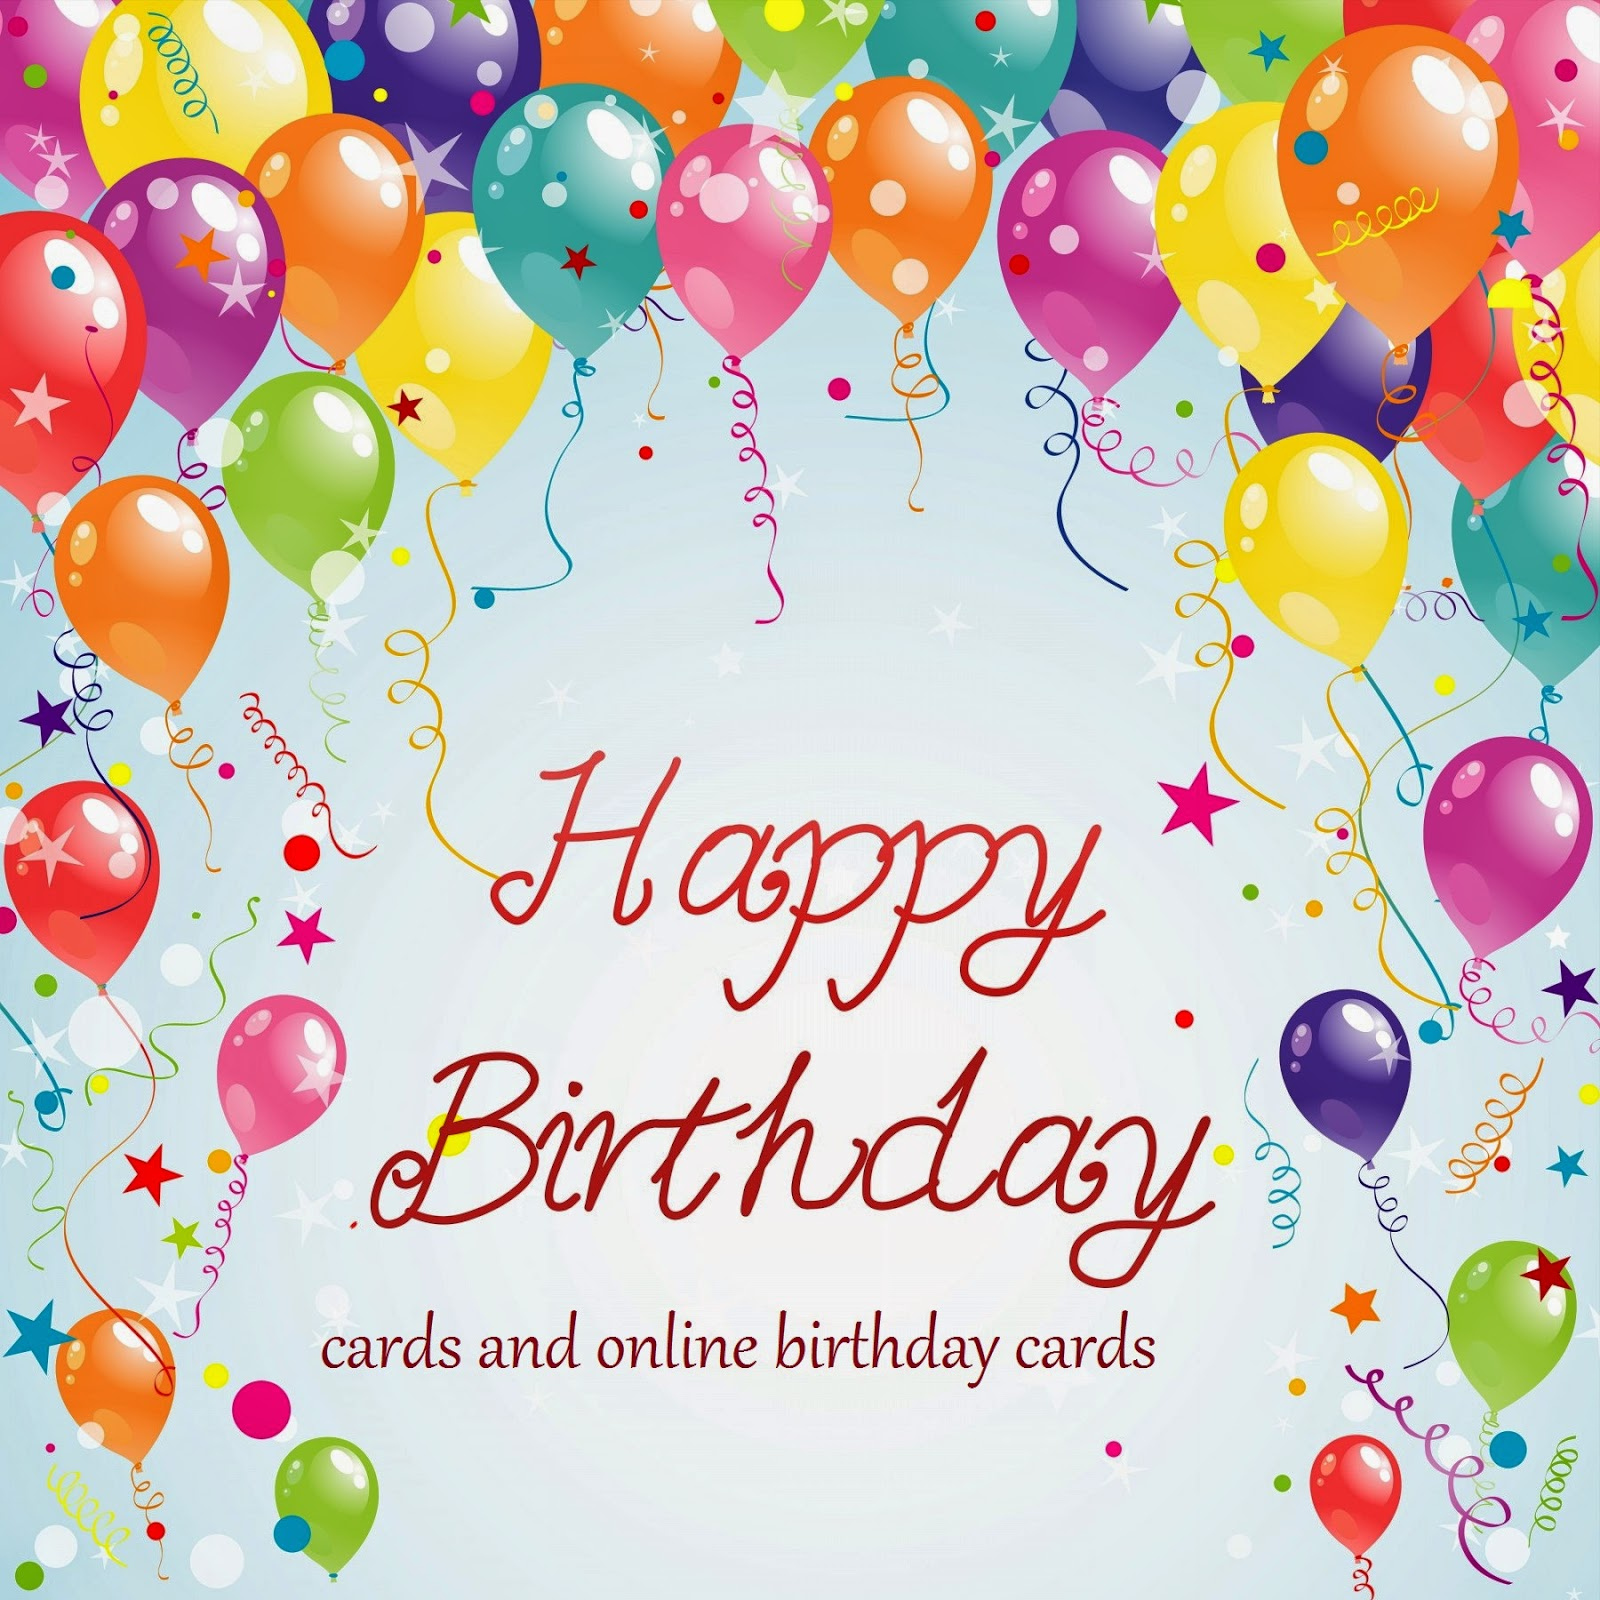  Happy Birthday Cards free birthday Cards And E Birthday Cards 